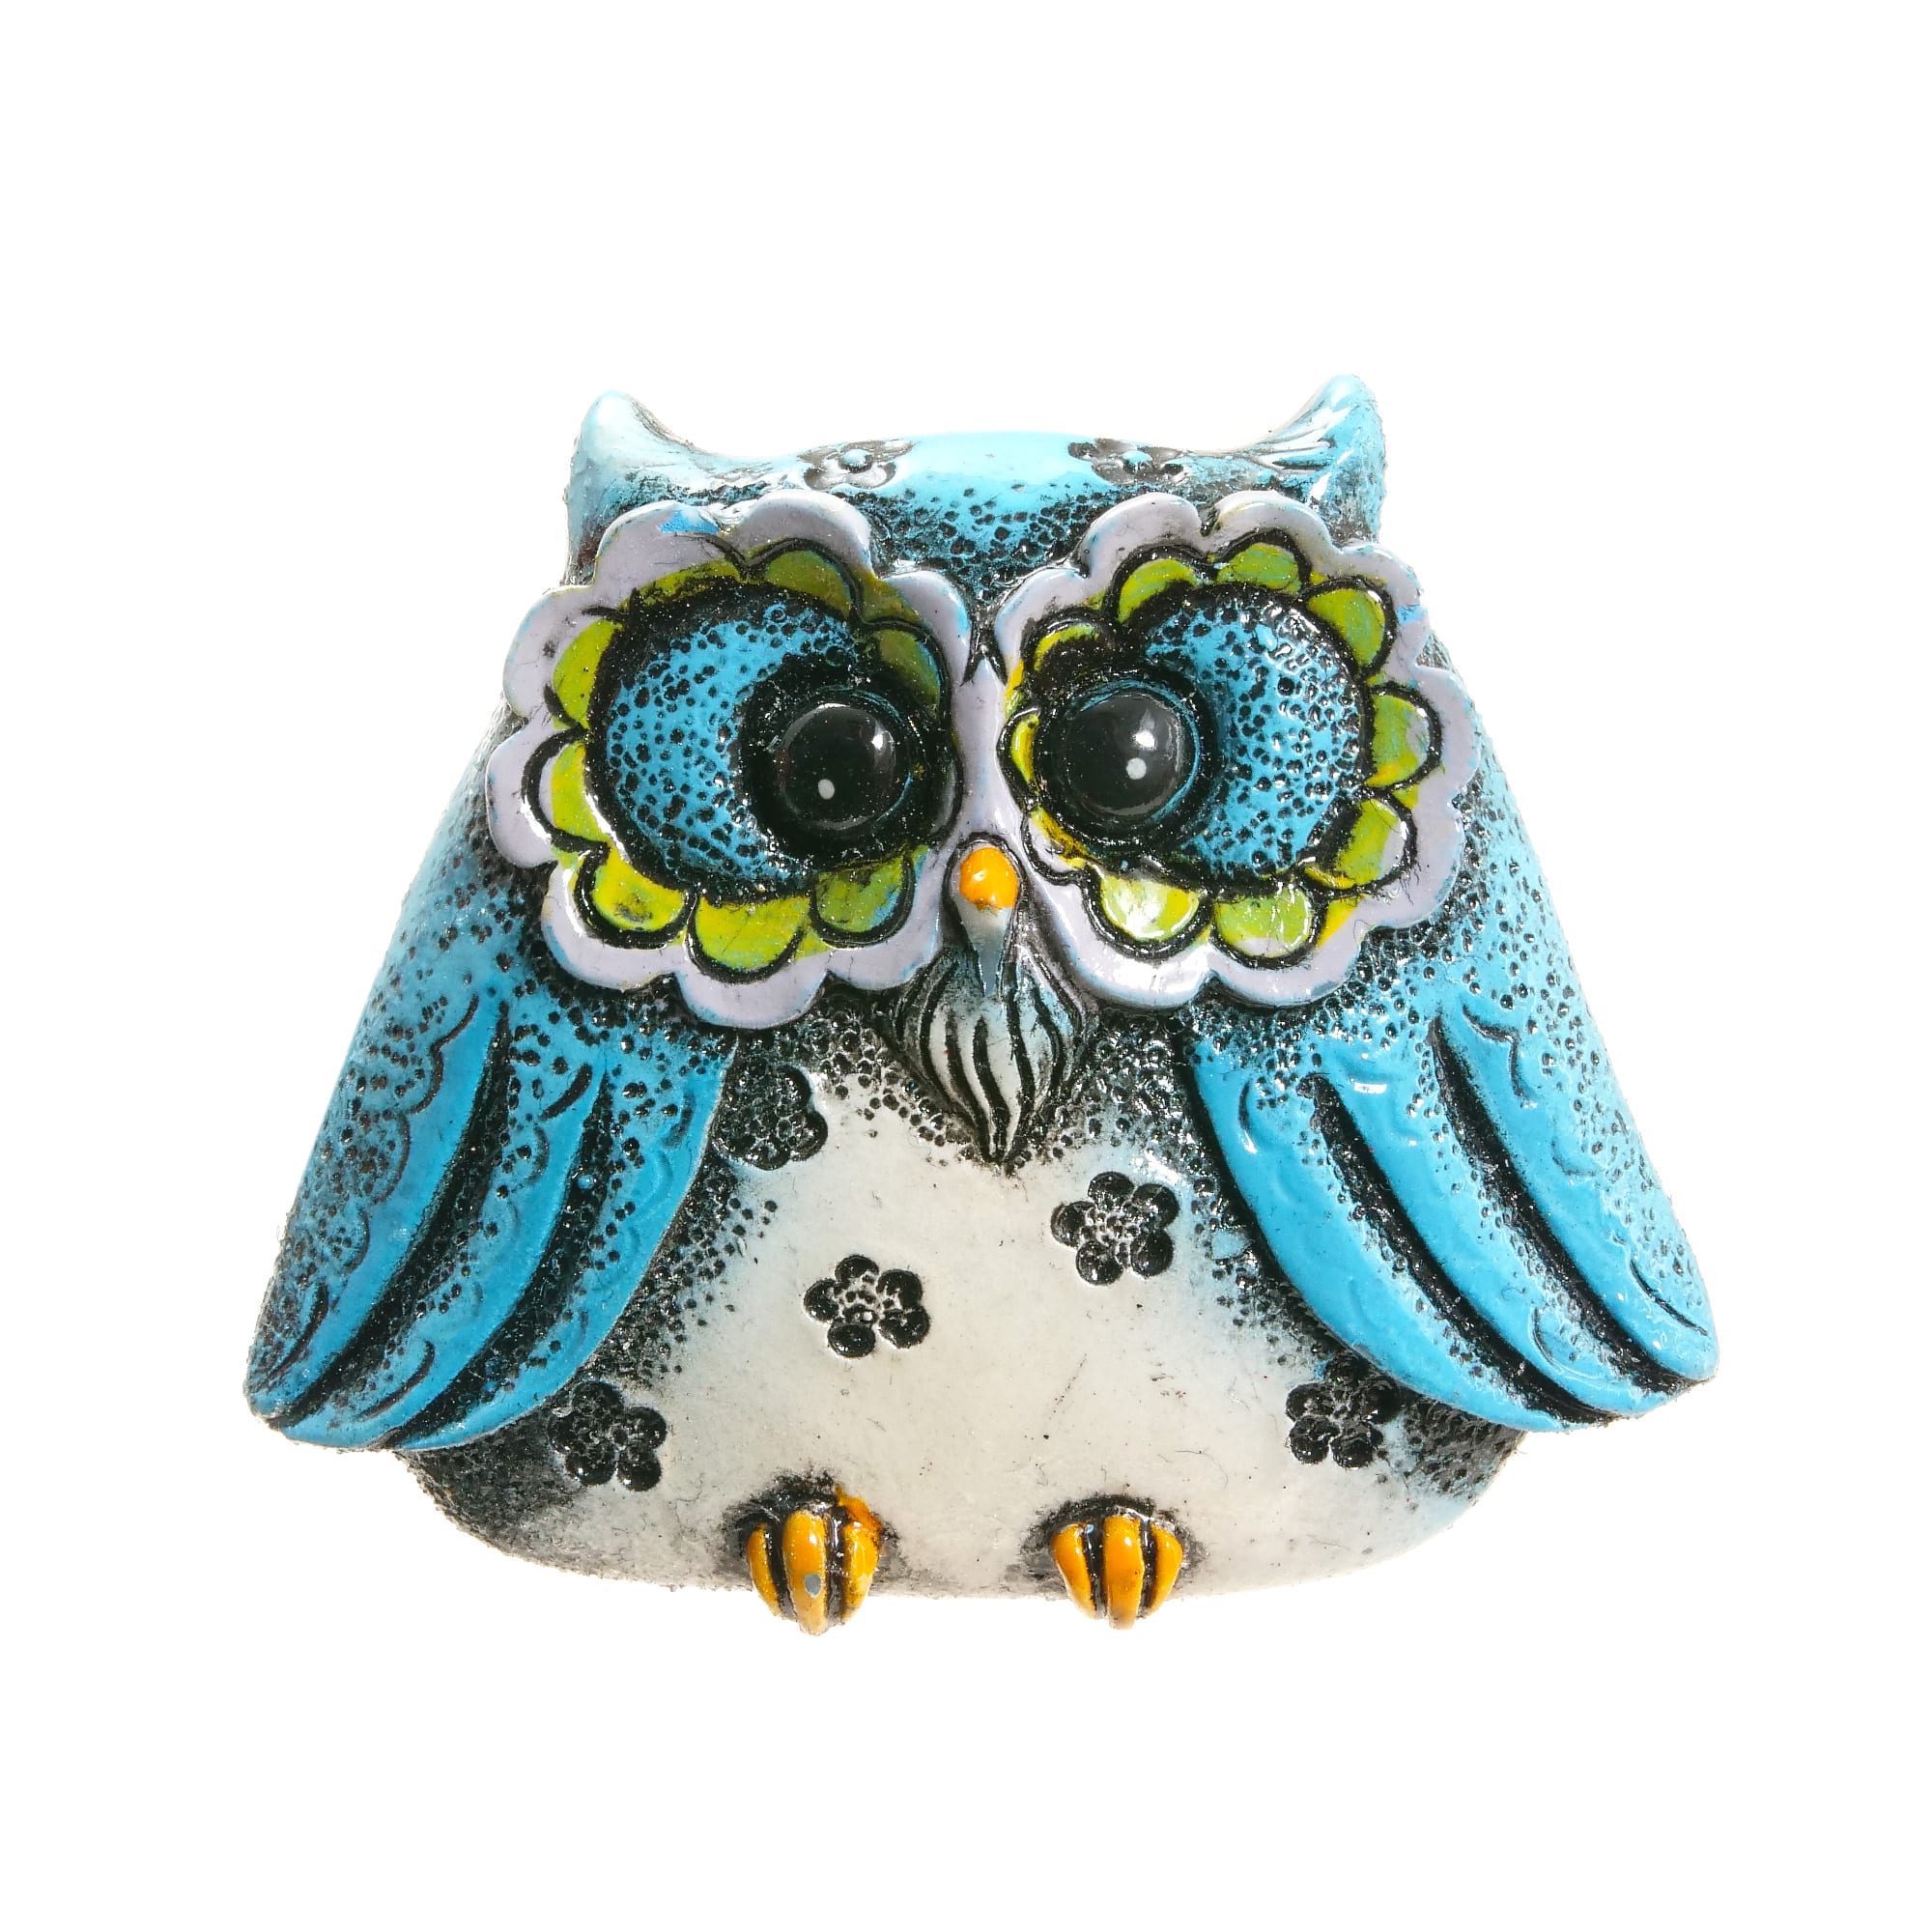 Decorative Fridge Décor Refrigerator Birds of Prey Gift Owls #2 Deco Magnet 